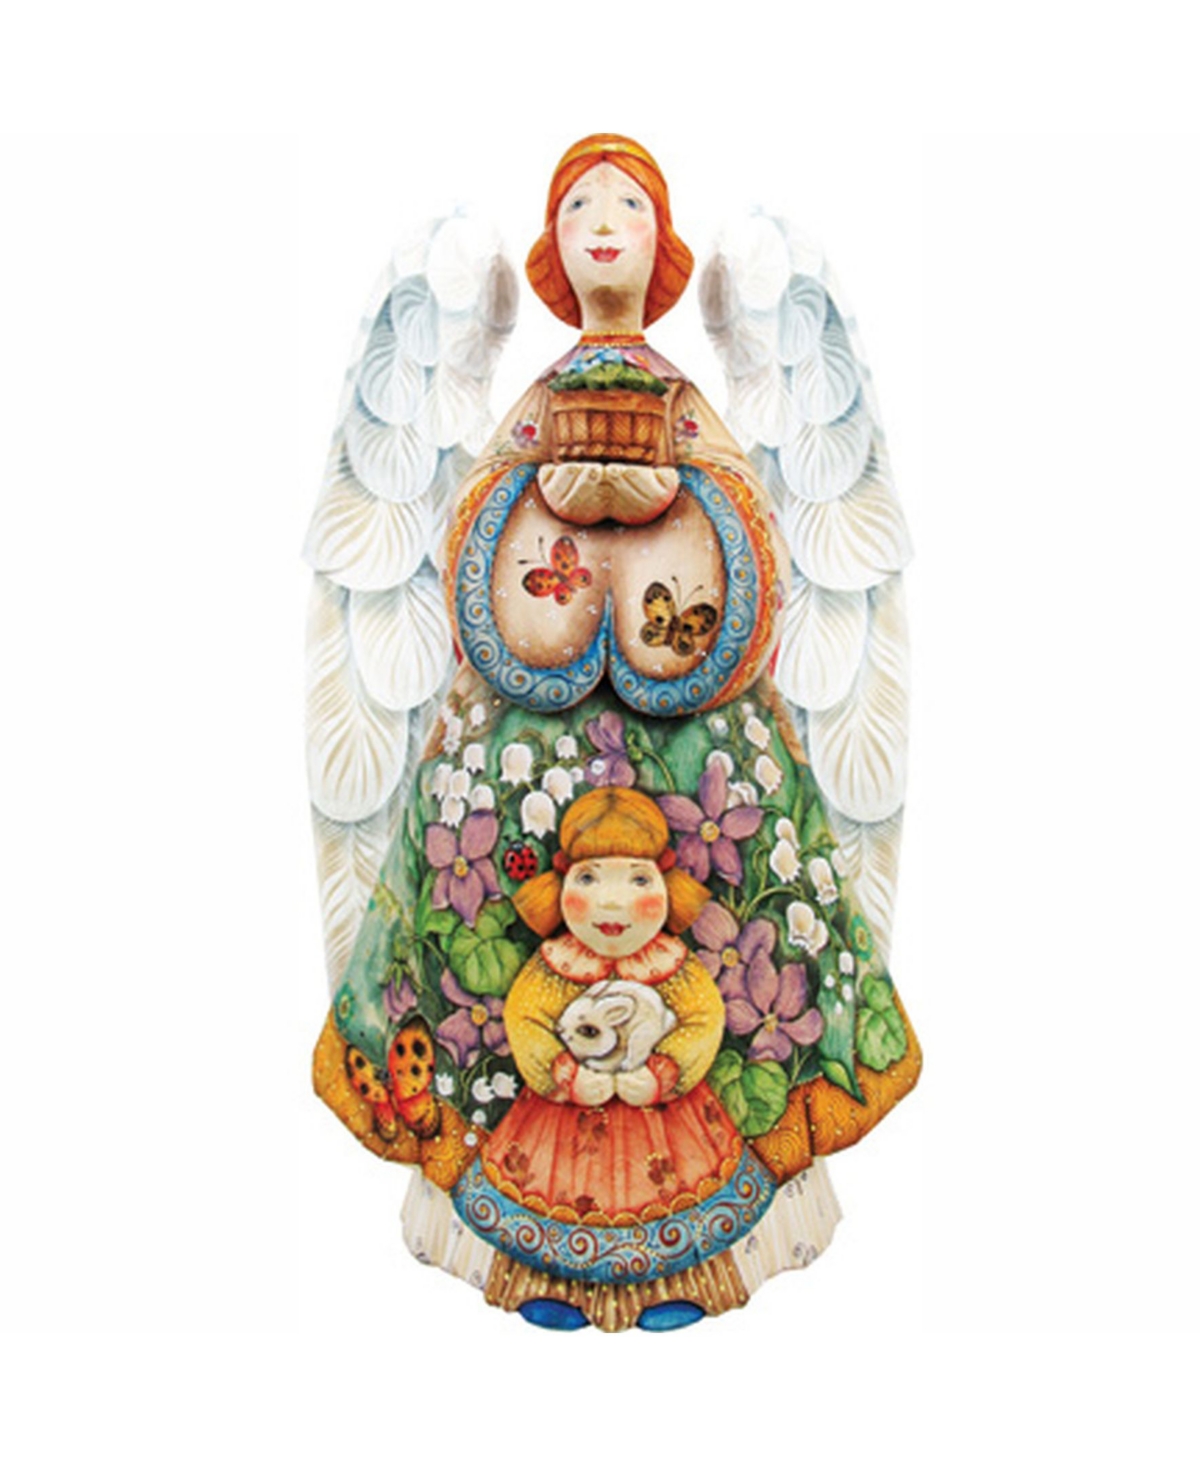 Woodcarved Summer Angel with Girl Santa Figurine - Multi